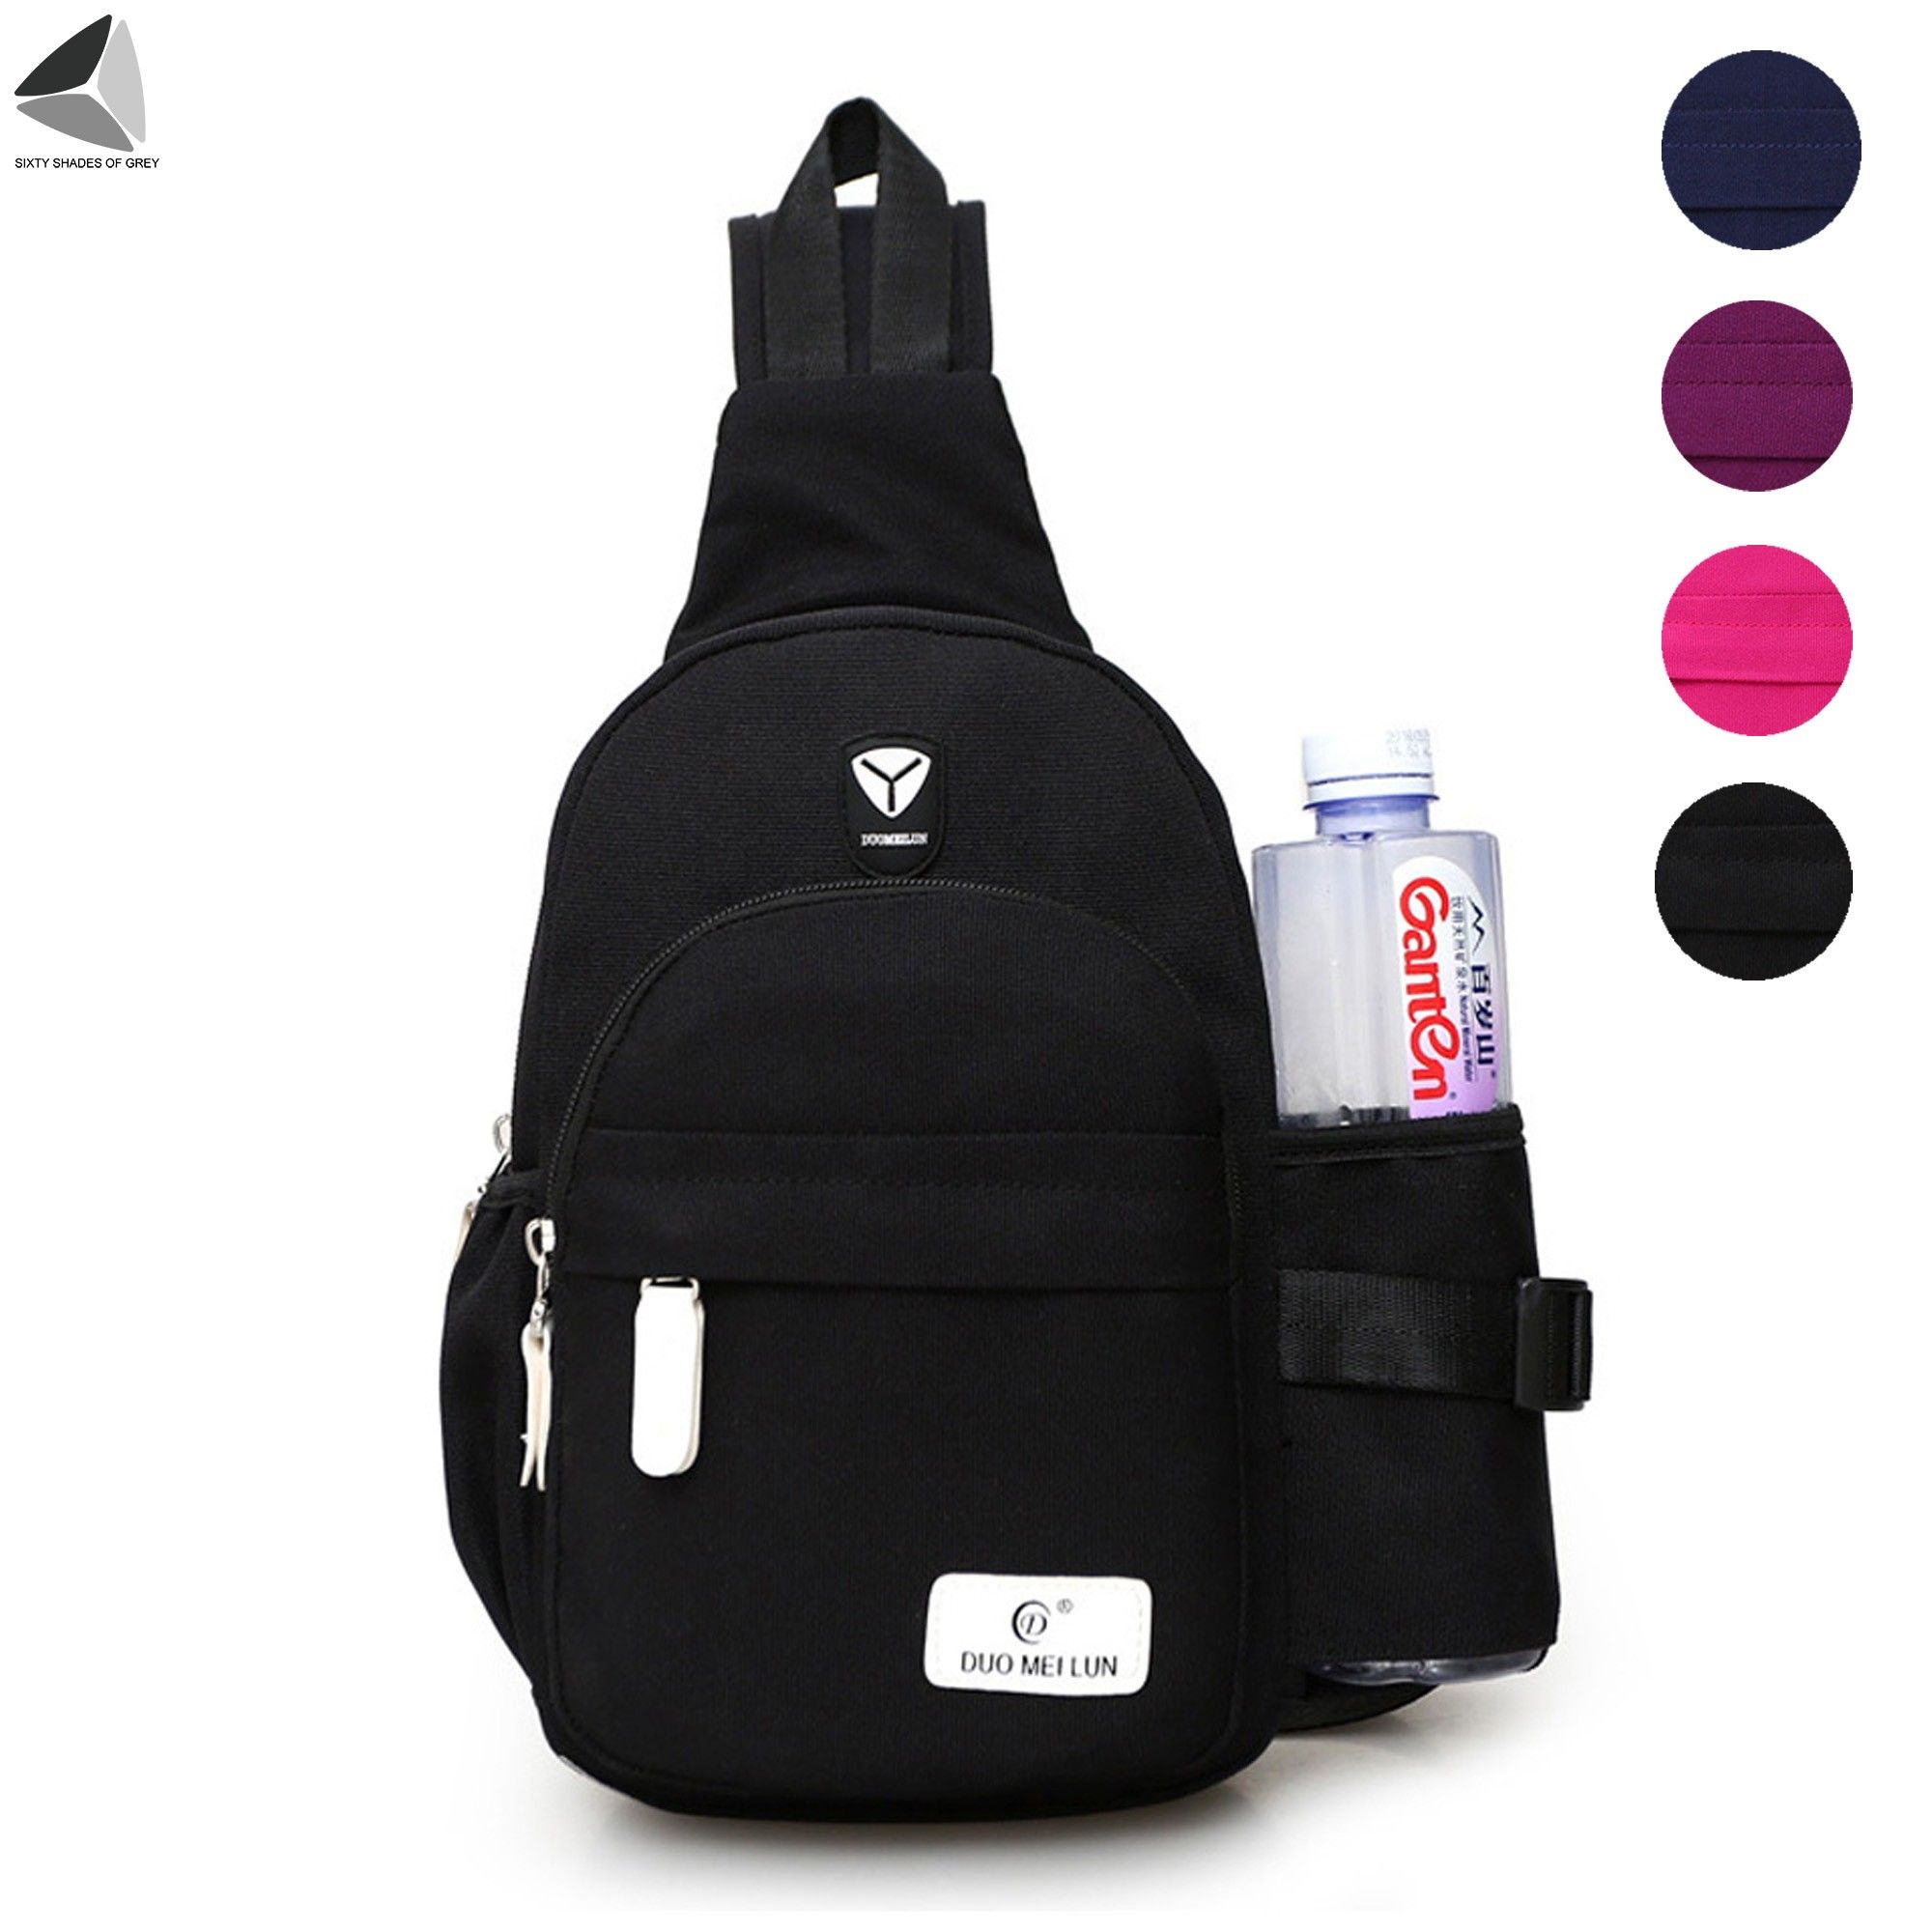 PULLIMORE Crossbody Sling Backpacks for Women Men Nylon Waterproof Shoulder Chest Bags Messenger Bags for Hiking Cycling Travel Business (Black) - image 1 of 9